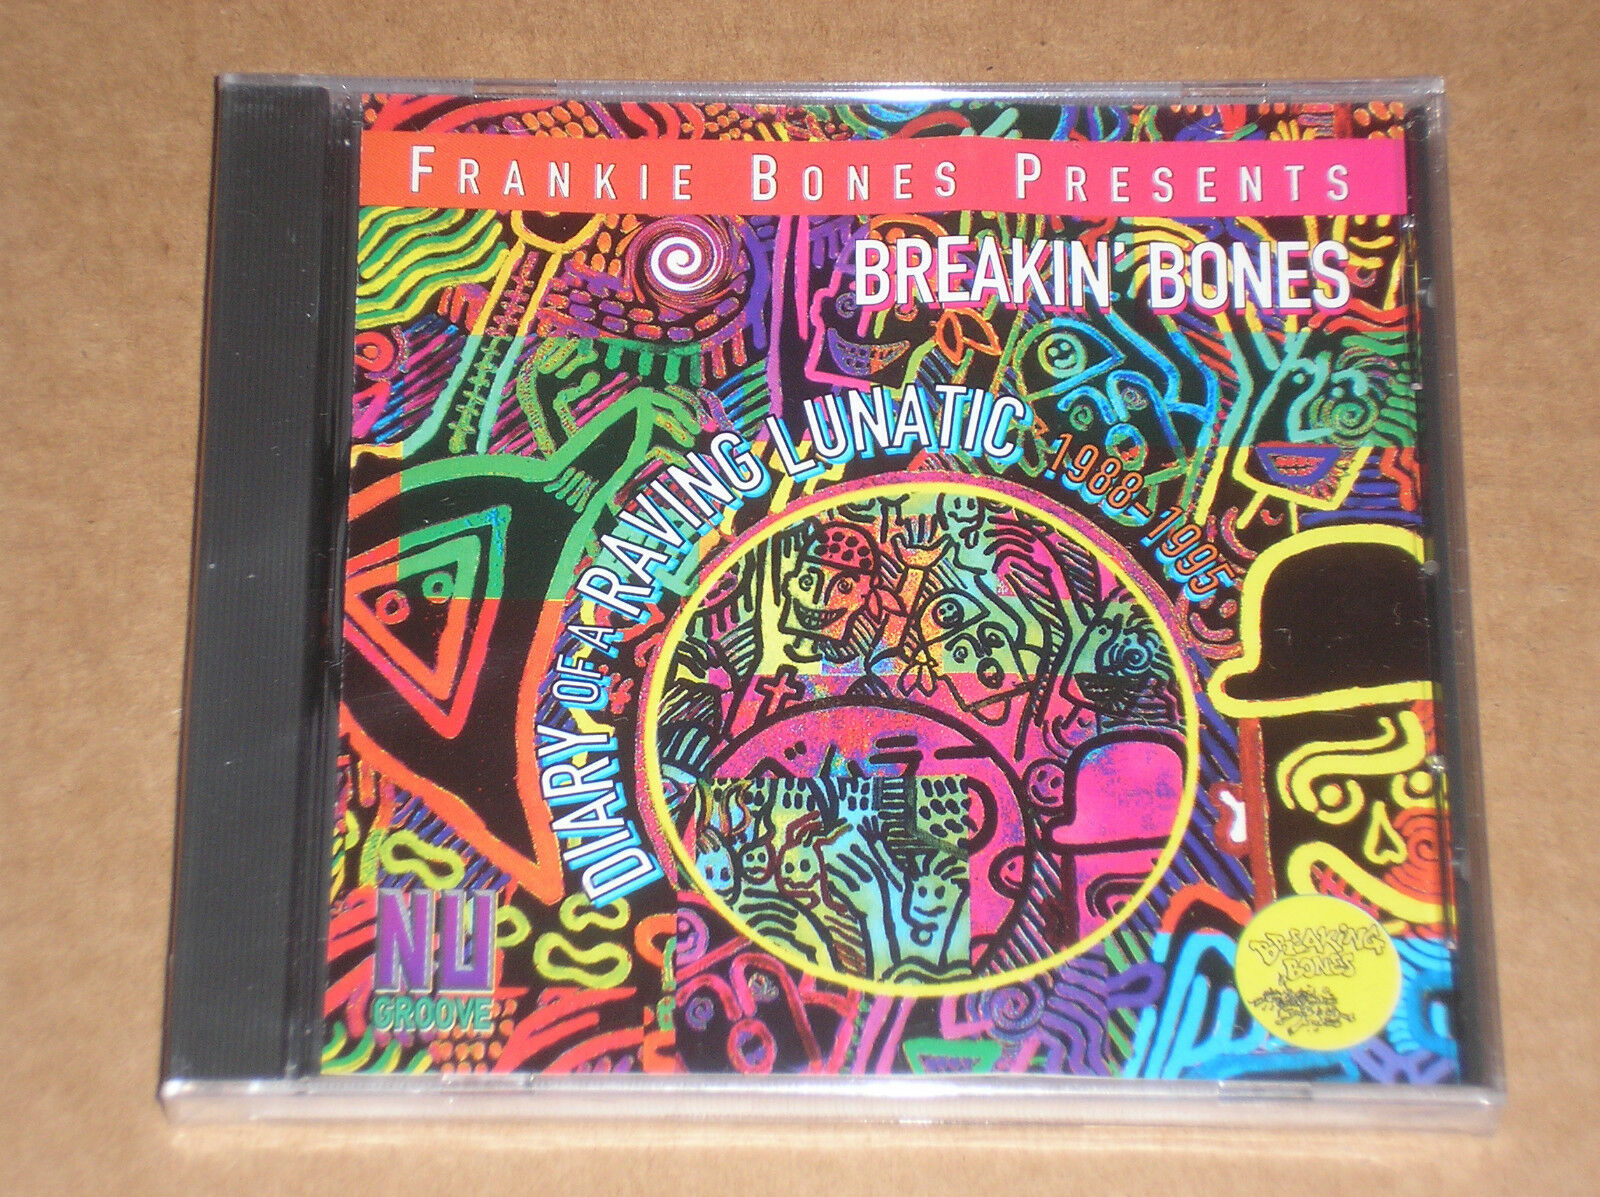 Frankie Bones - Breakin' bones